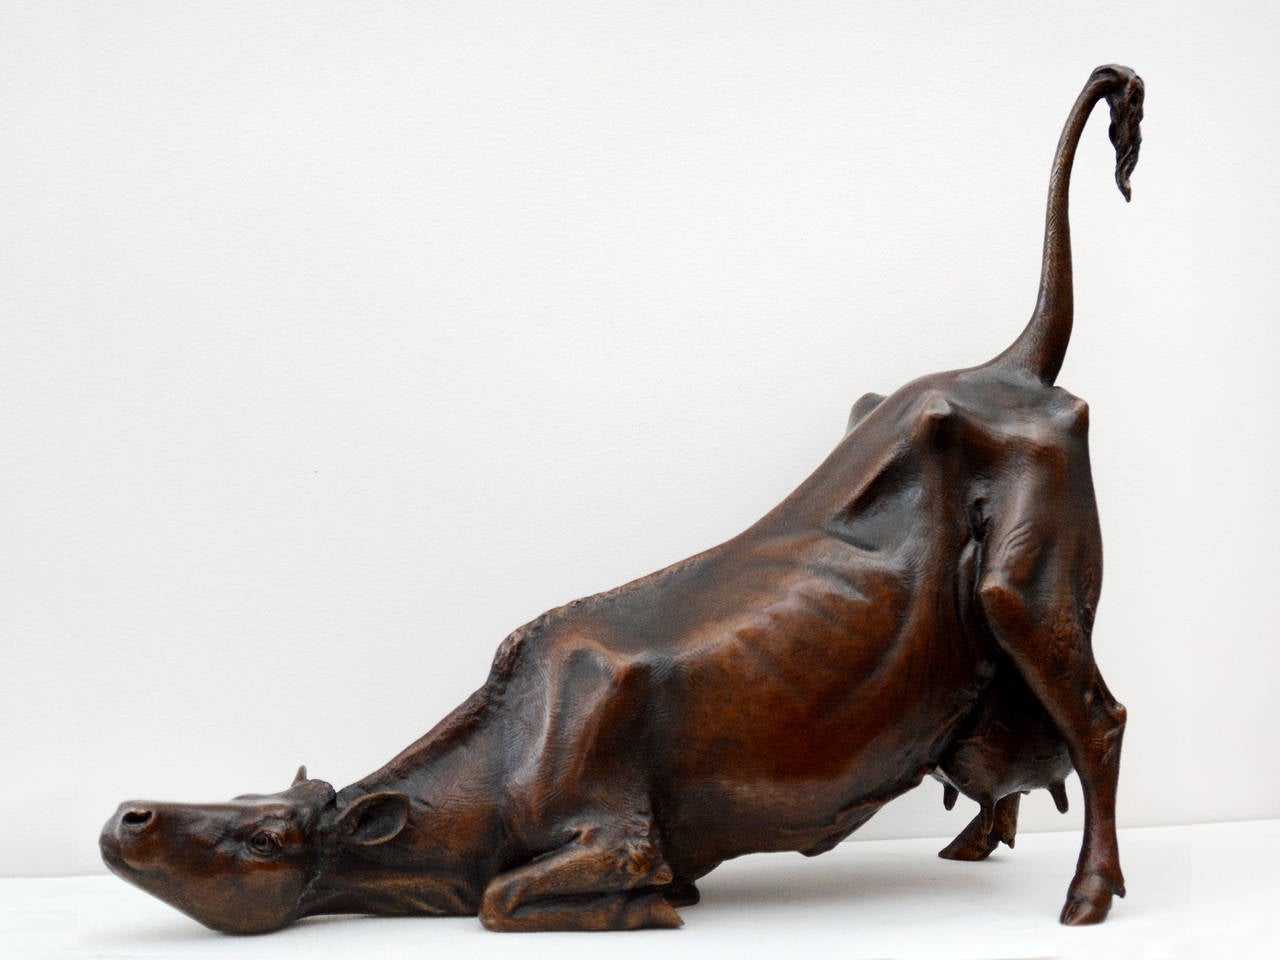 Old Bitch 2/8 - small, rustic, figurative, female cow, bronze interior sculpture - Sculpture by Nicholas Crombach